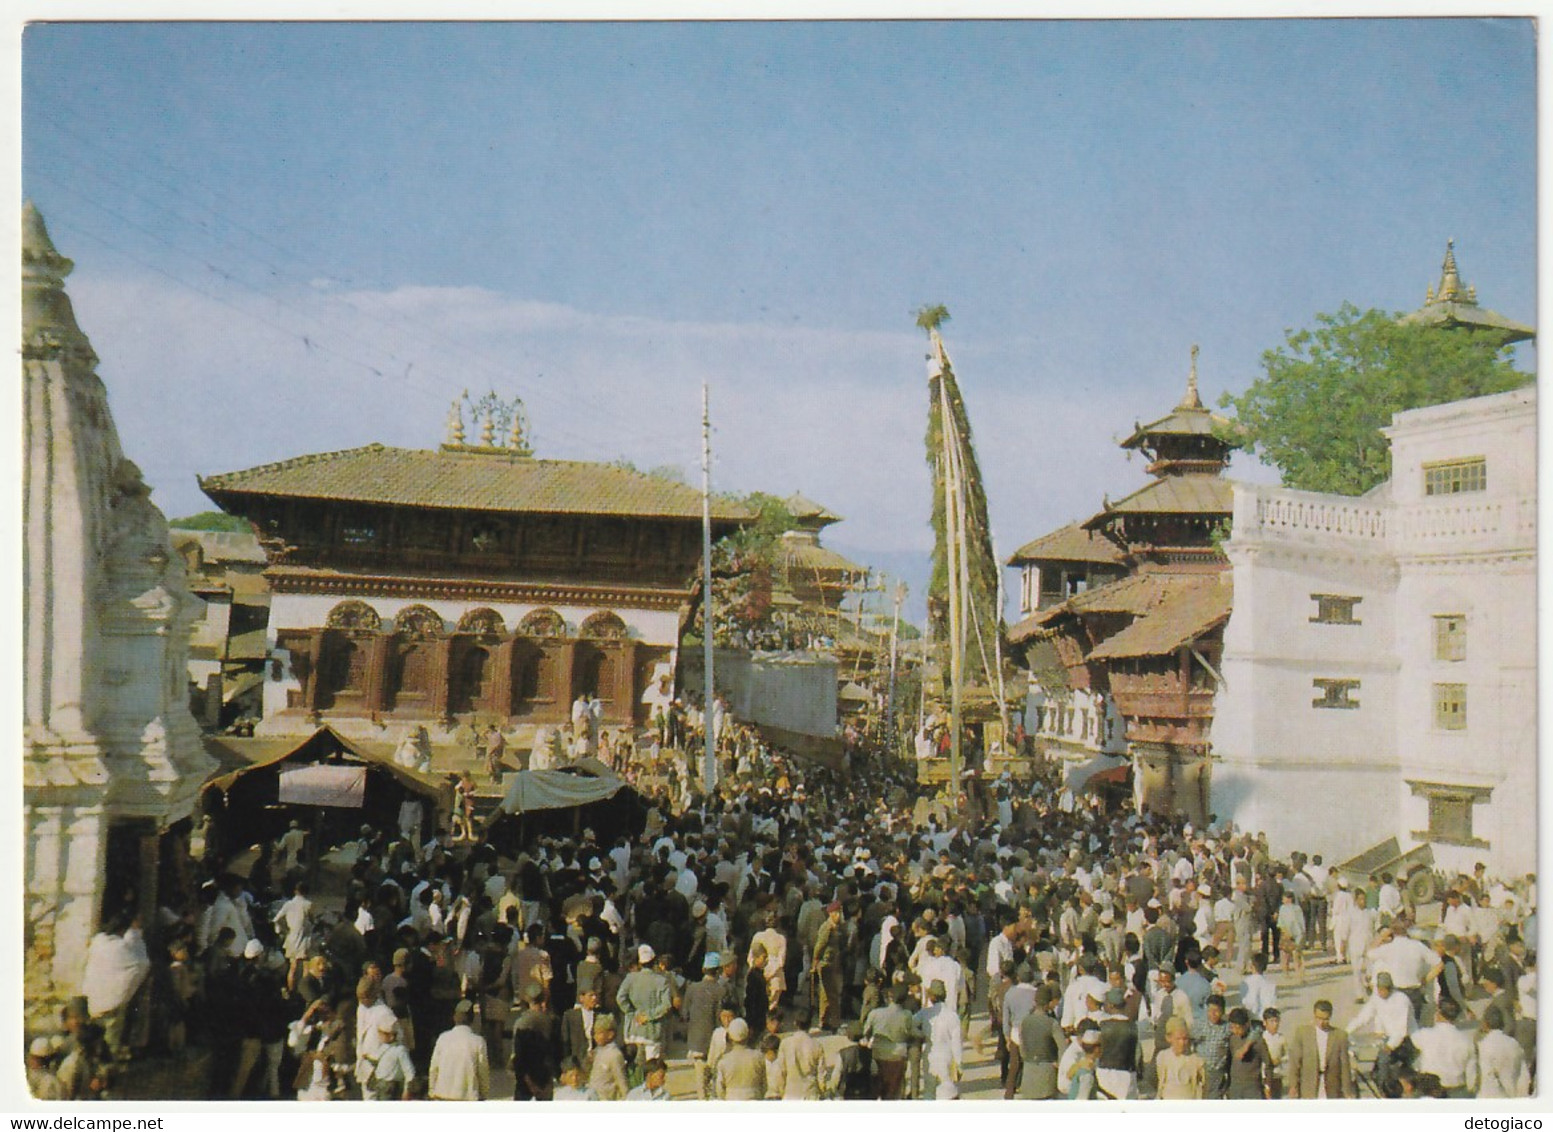 NEPAL - CHARIOT FESTIVAL OF MACHHENDRANATH -53572- - Népal